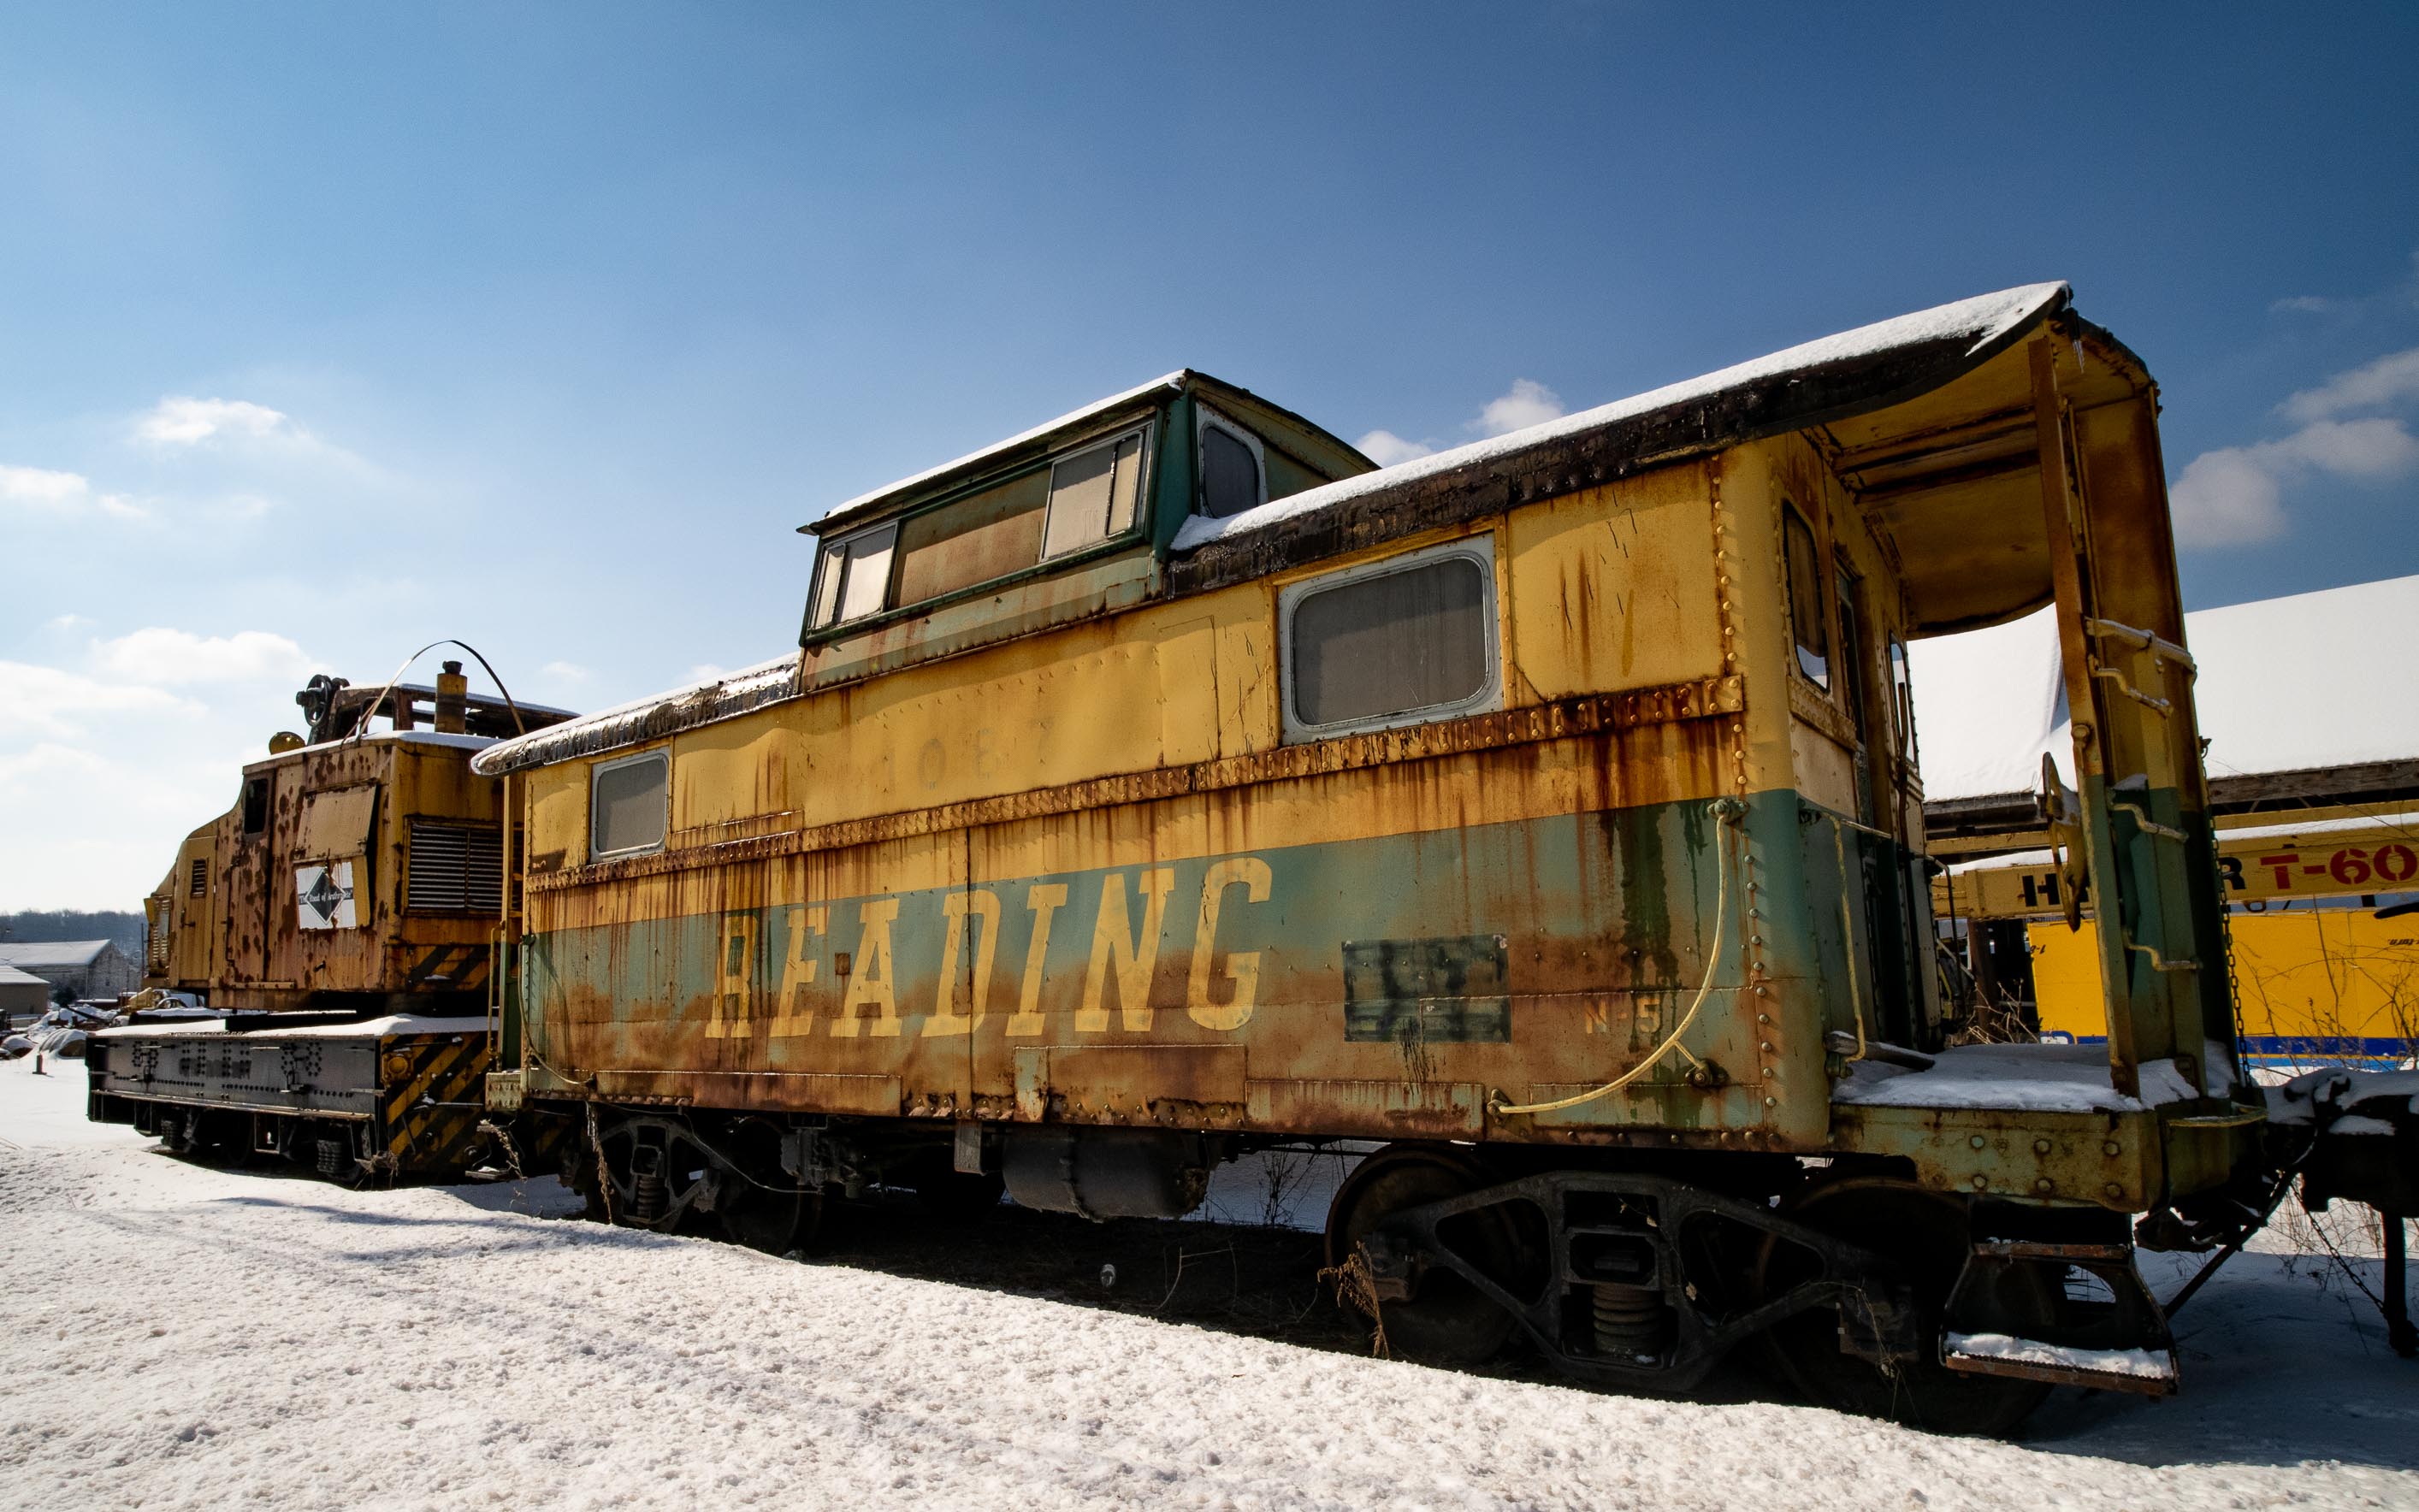 An old Reading Railroad train car.